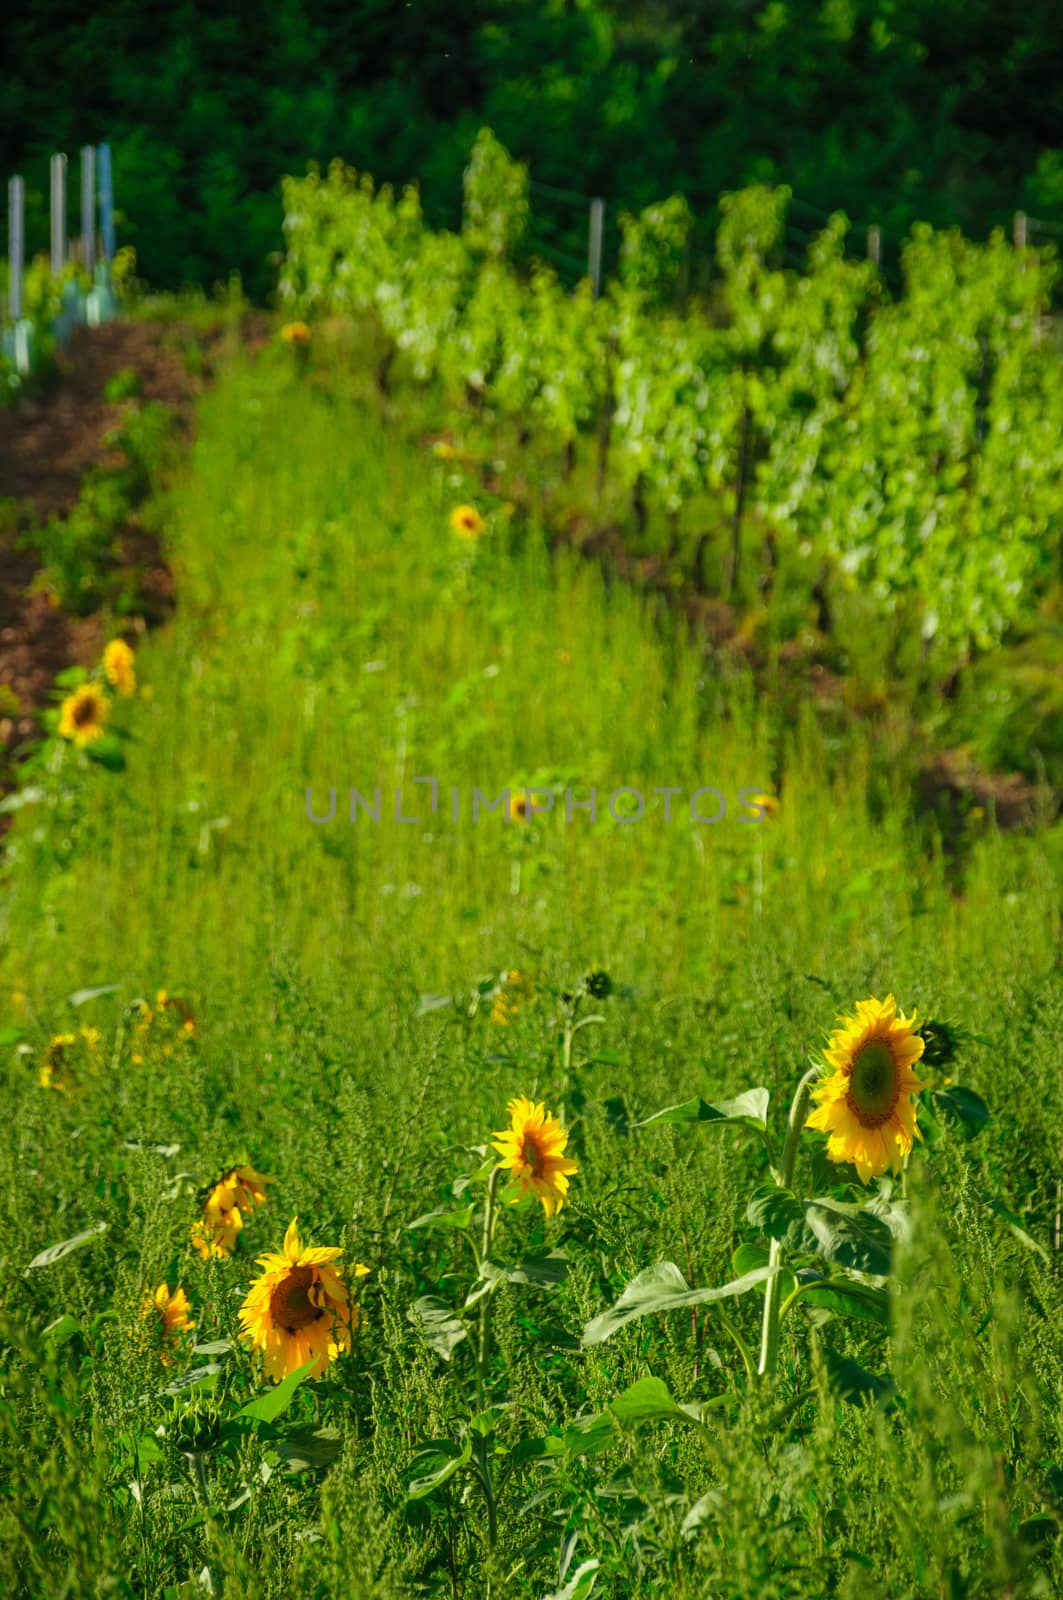 Sunflowers near vineyard by Eagle2308